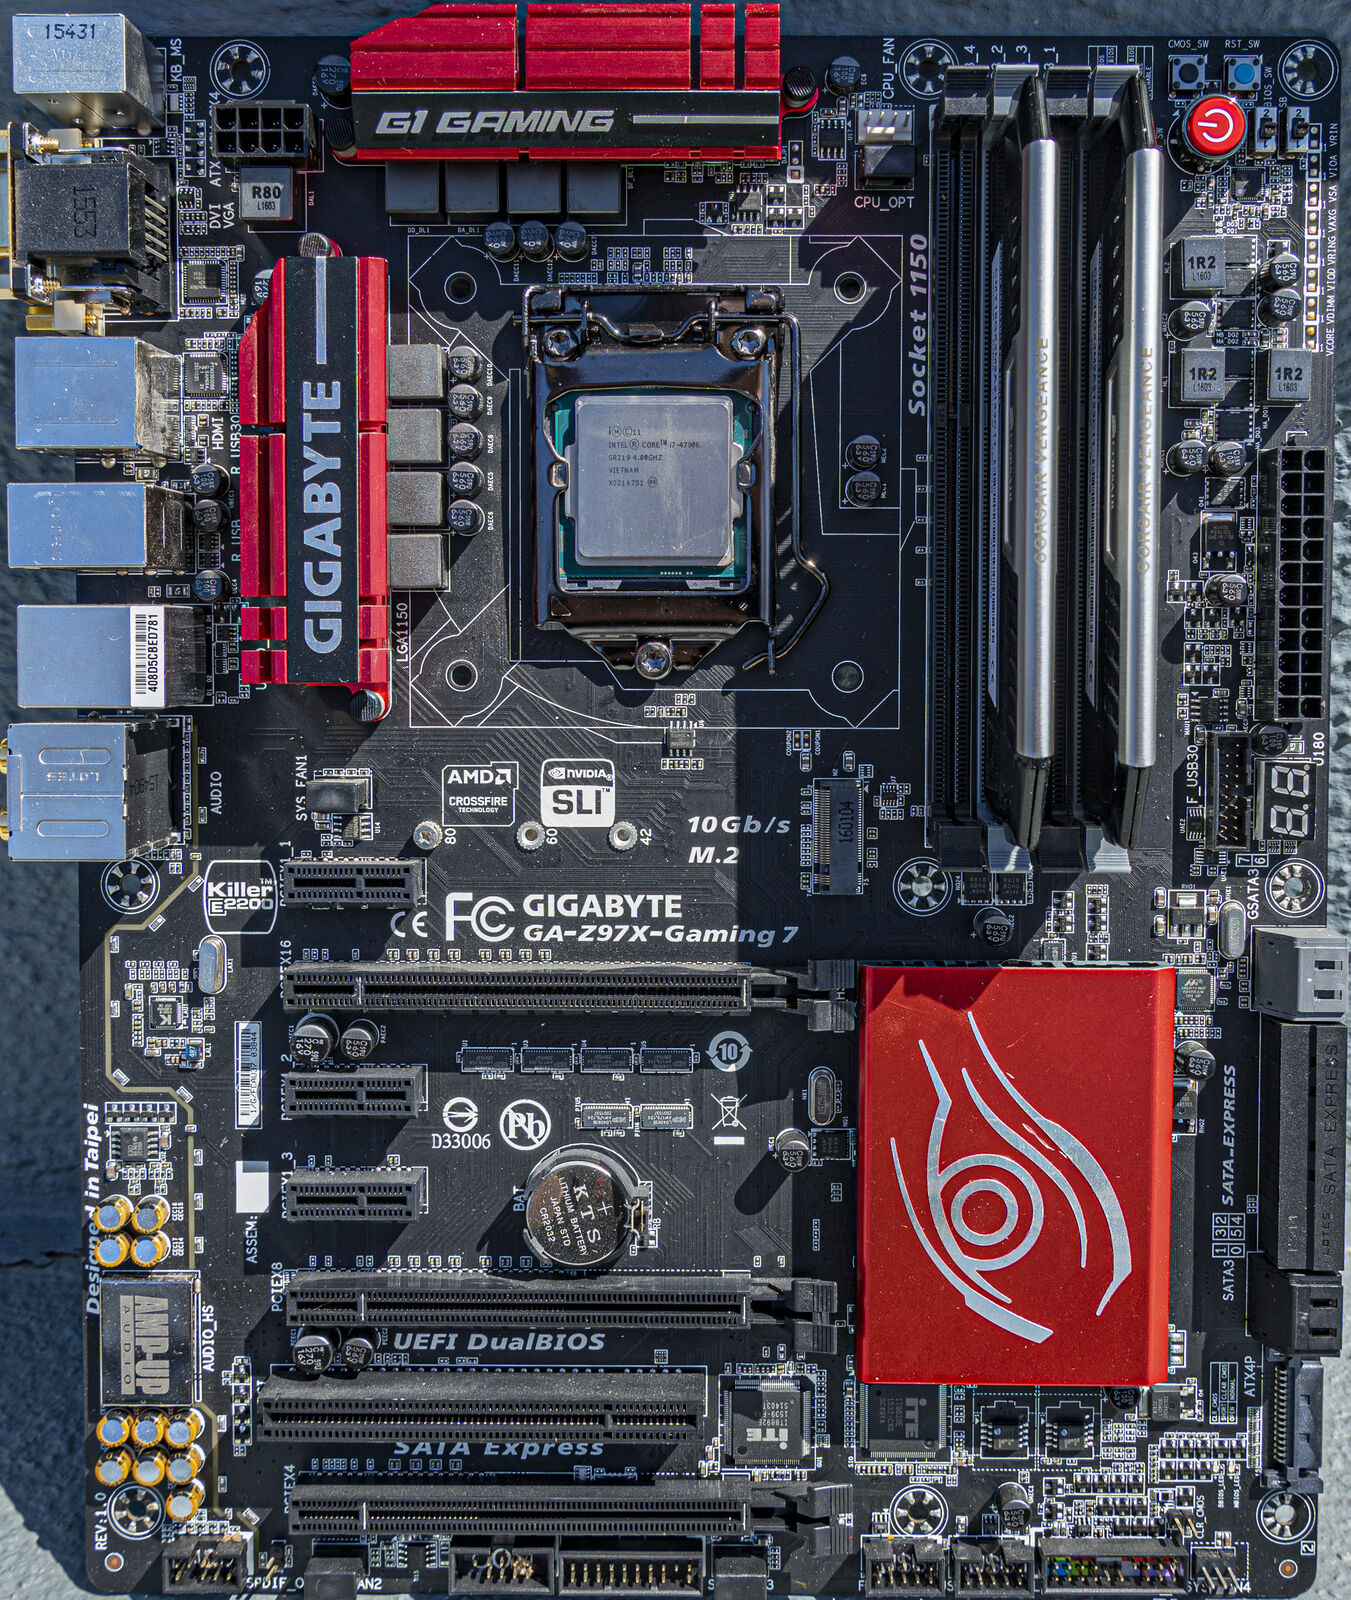 Gigabyte GA-Z97X-Gaming 7 Mainboard w/ Intel Core i7-4790K 4GHz 16GB Corsair Ram